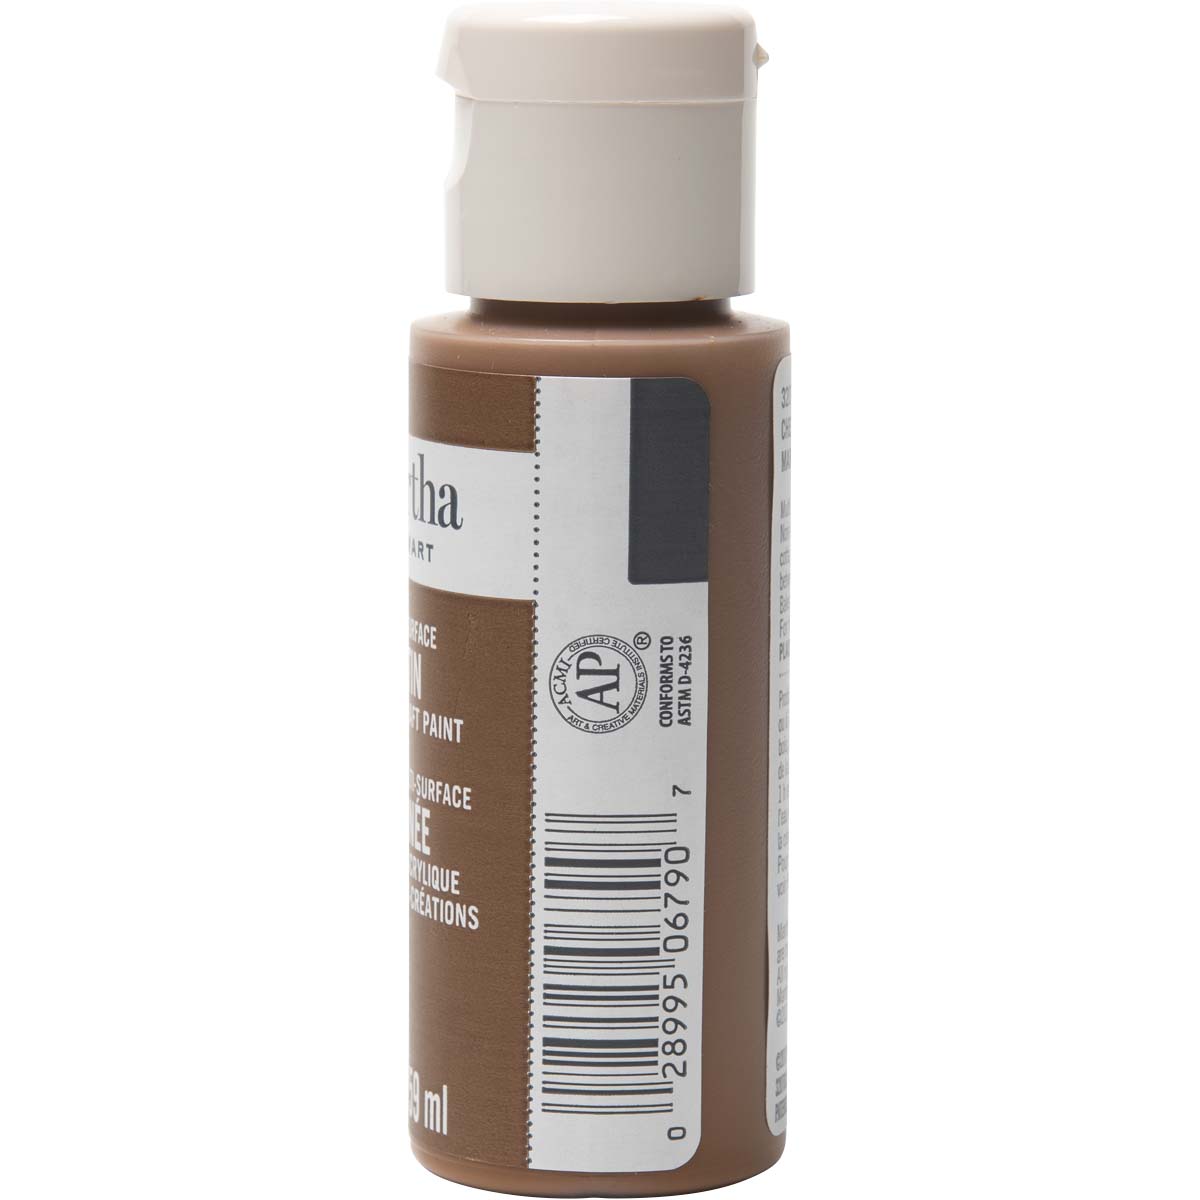 Martha Stewart ® Multi-Surface Satin Acrylic Craft Paint - Chestnut Brown, 2 oz. - 32070CA